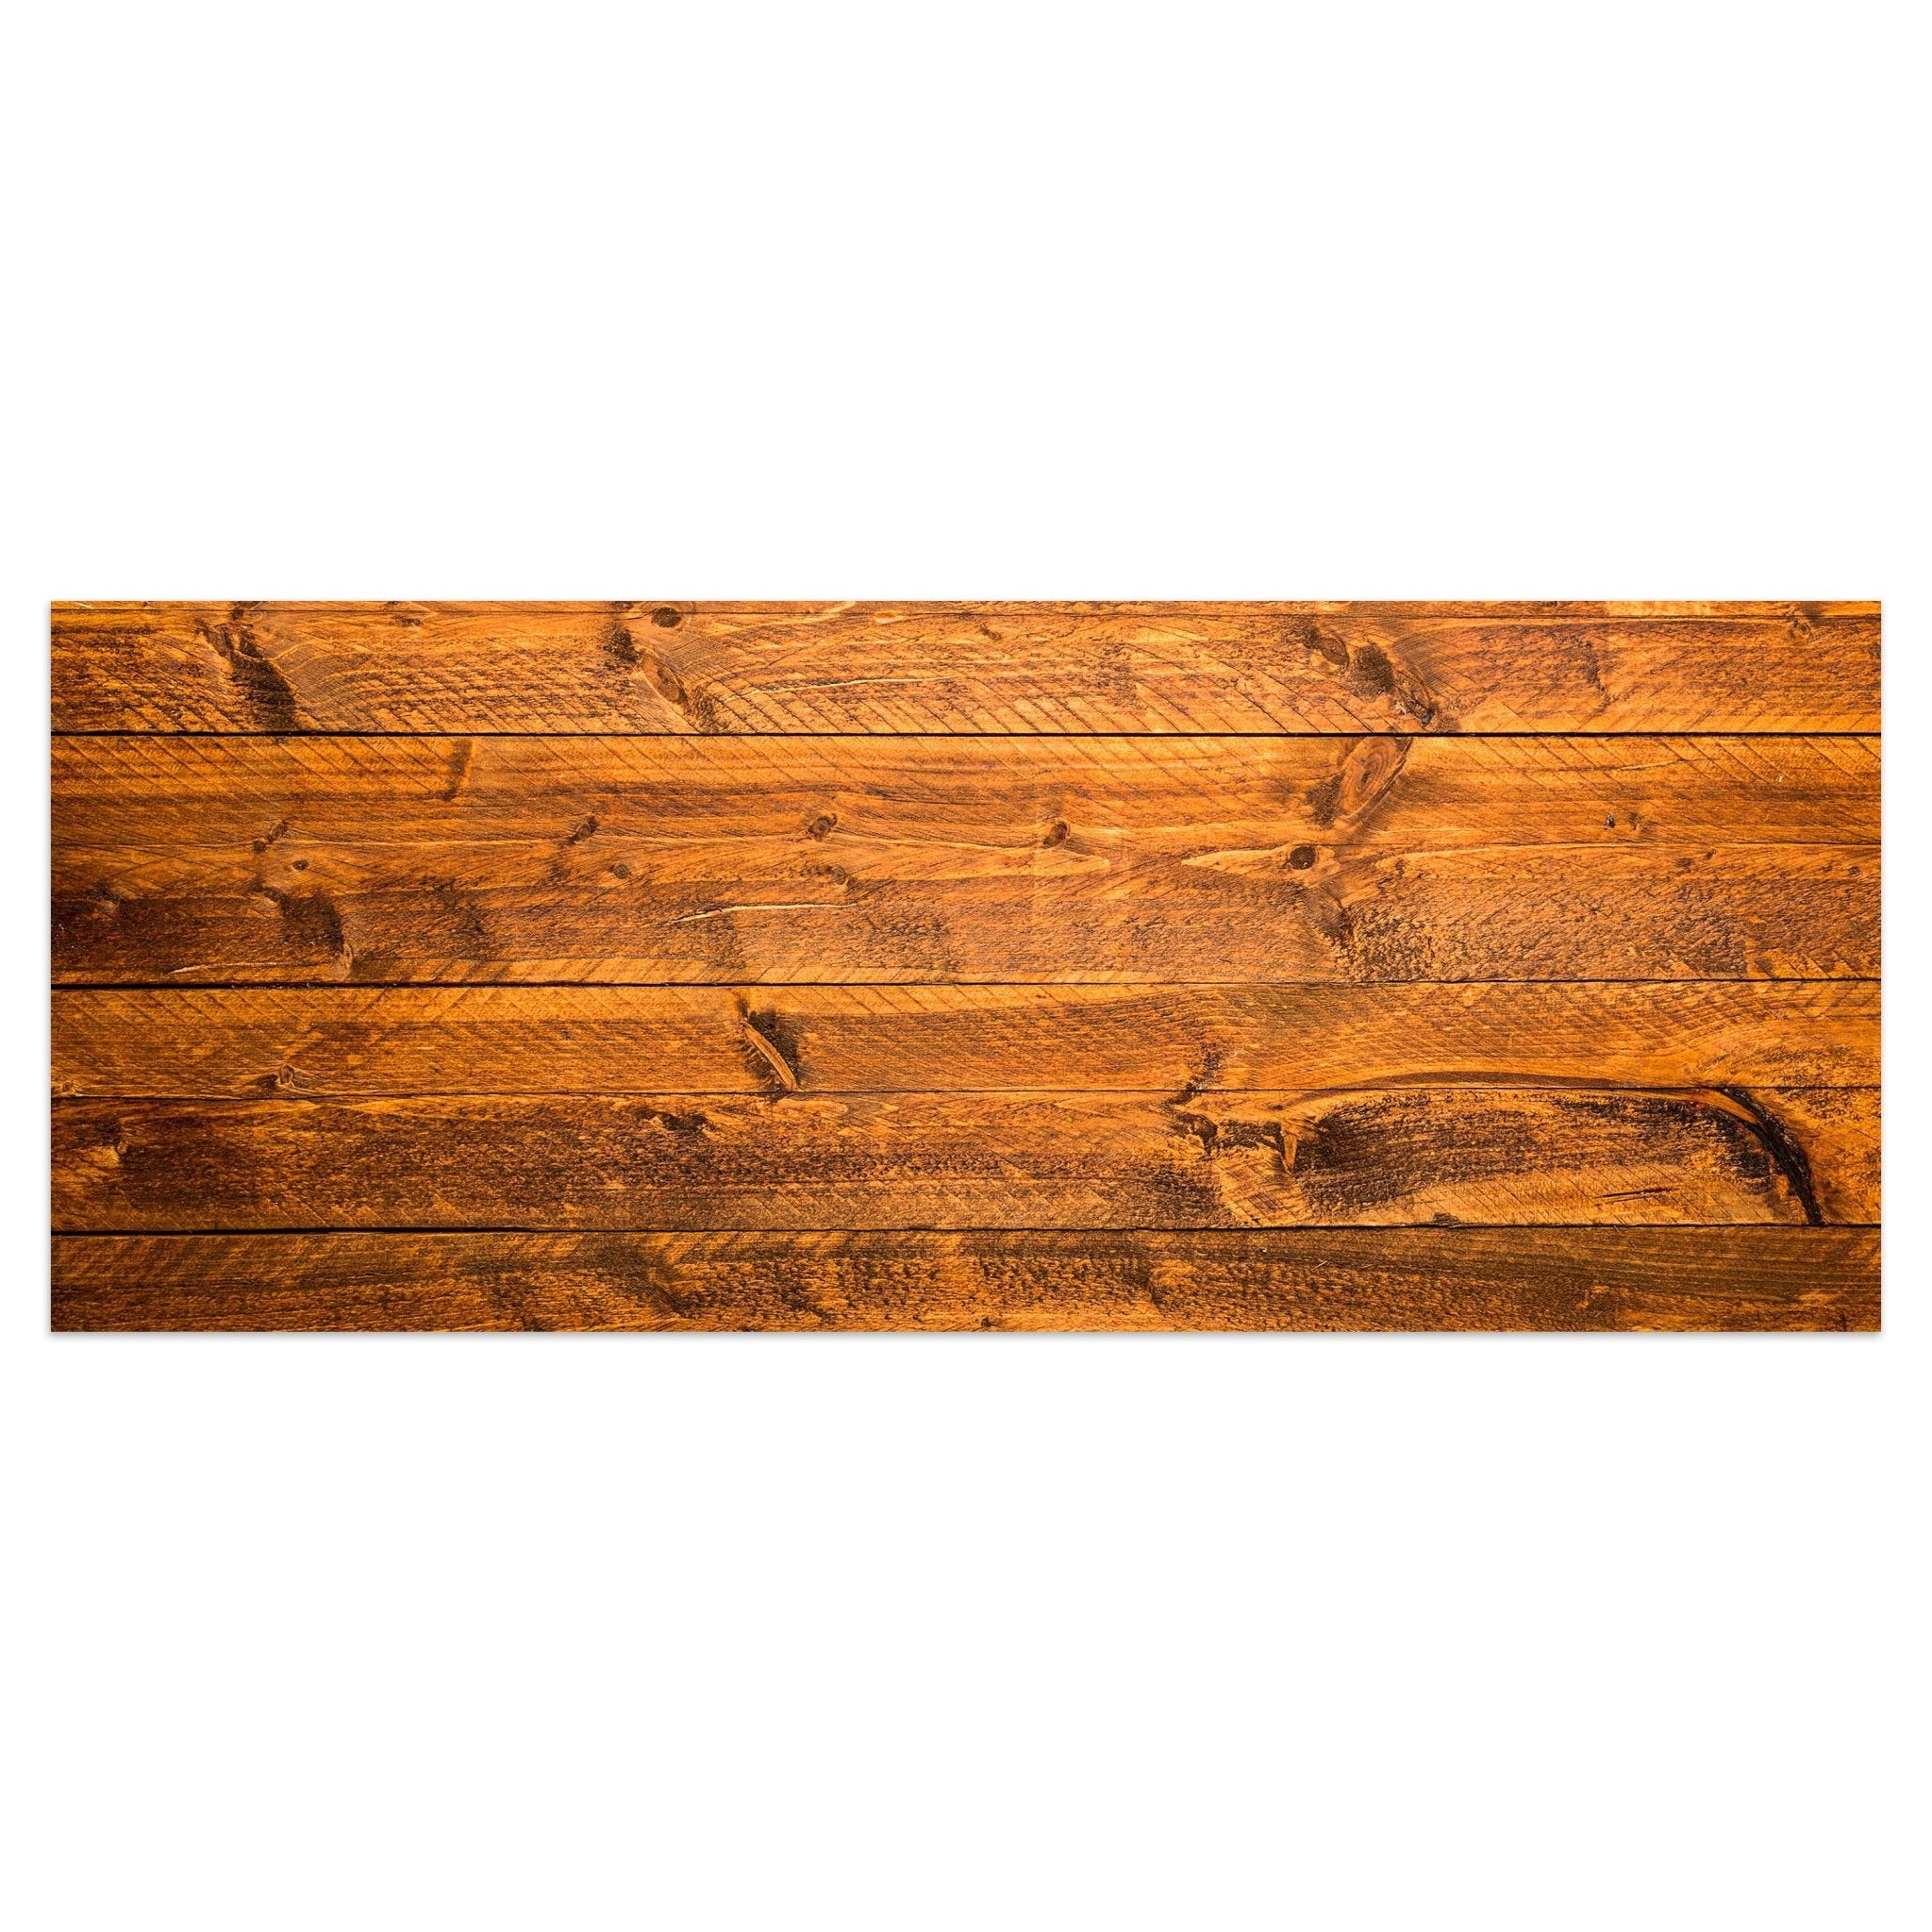 Leinwandbild Alte Holzwand M0719 kaufen - Bild 1